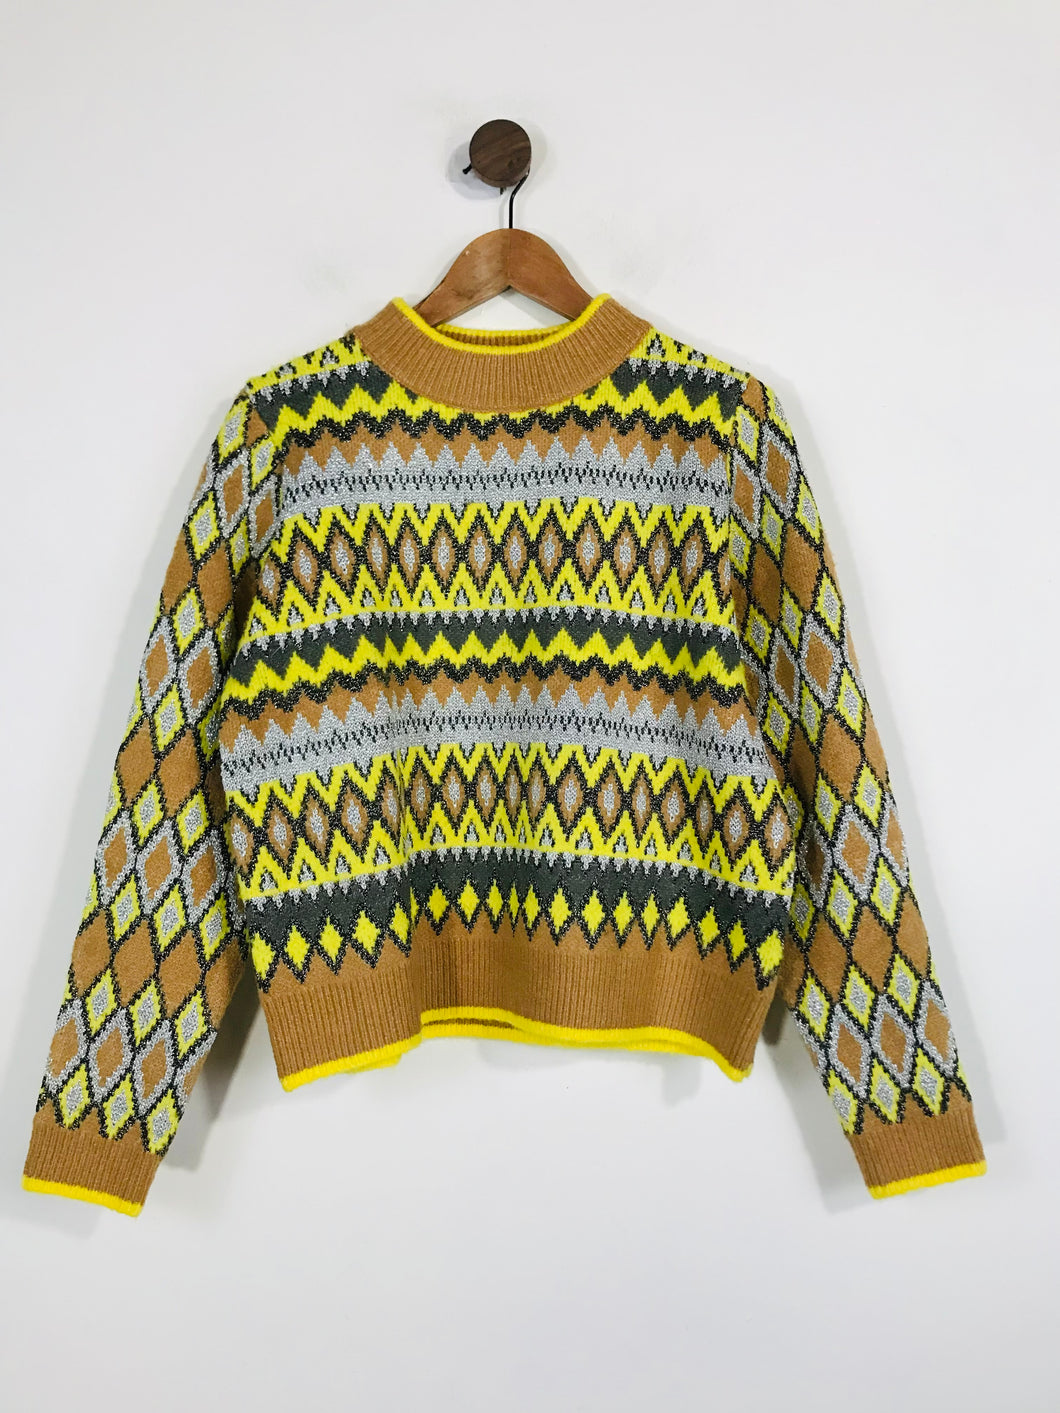 Zara Women's Boho Knit Jumper | M UK10-12 | Multicoloured